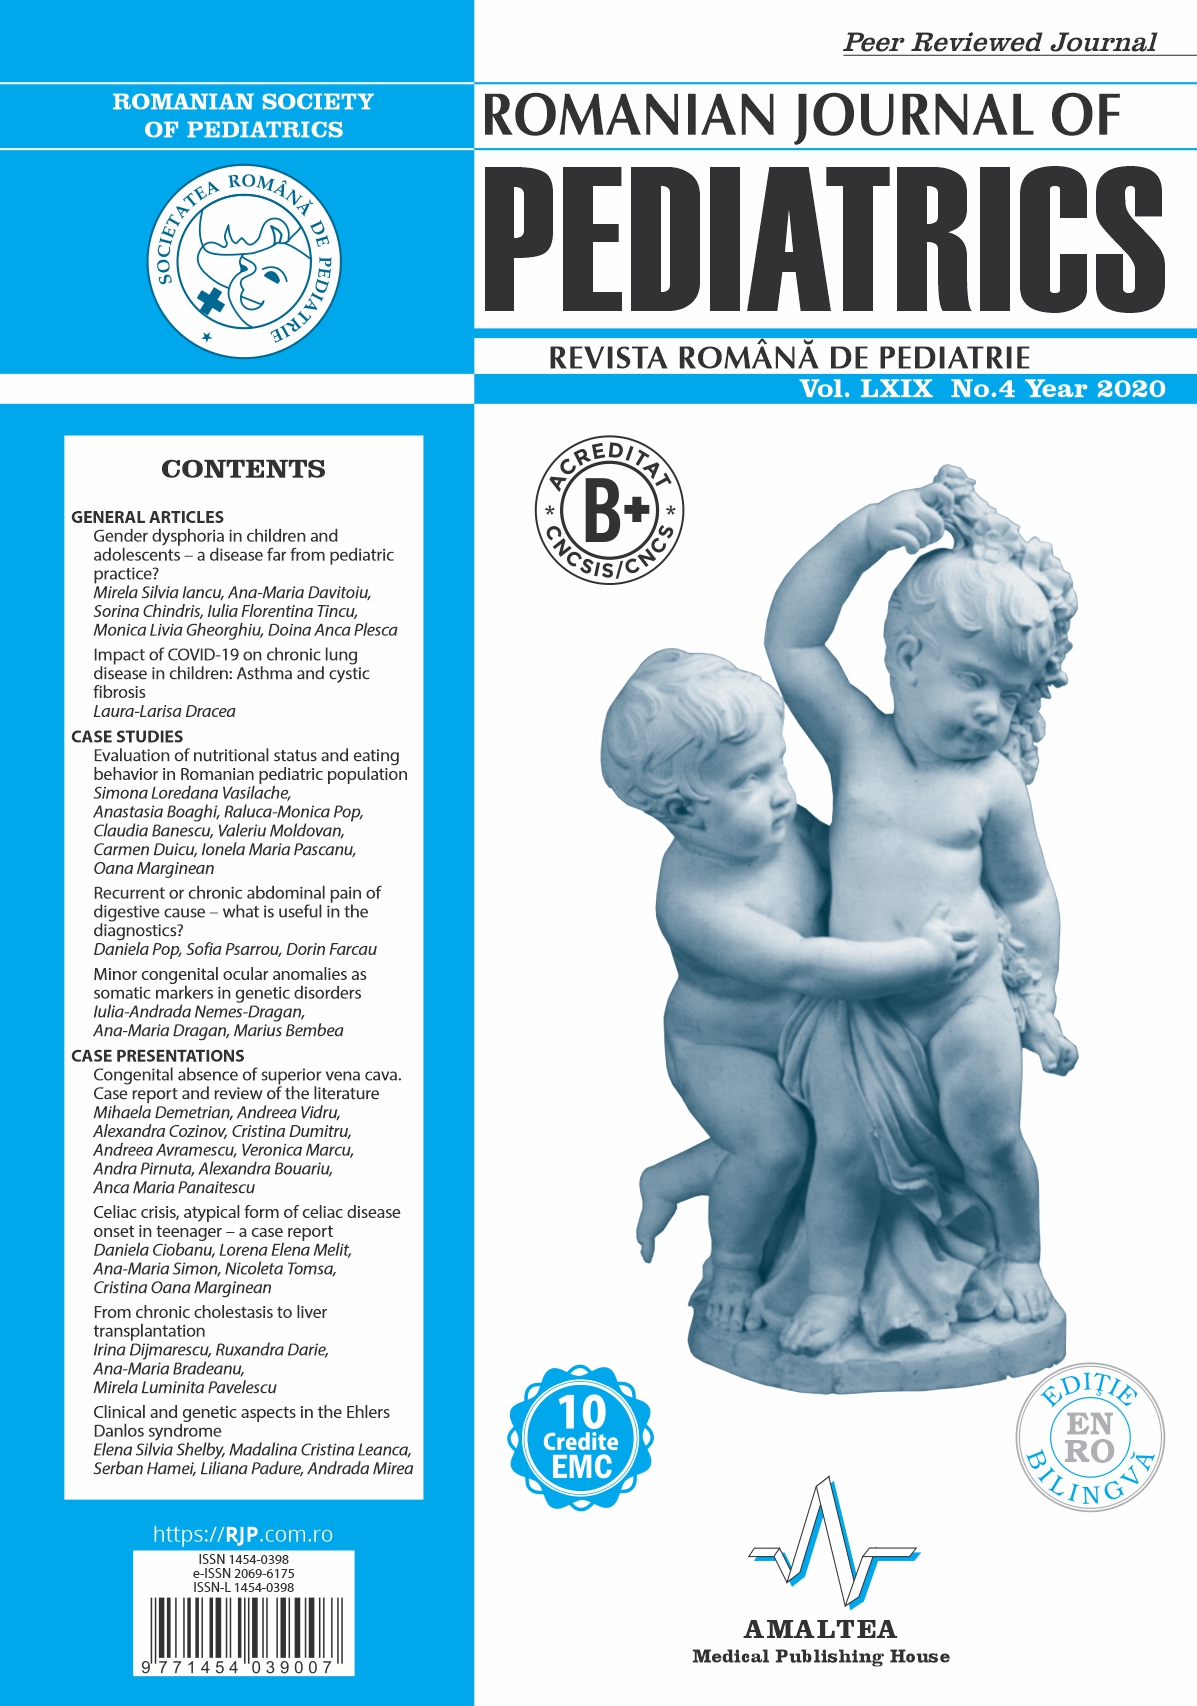 Romanian Journal of Pediatrics | Volume LXIX, No. 4, Year 2020